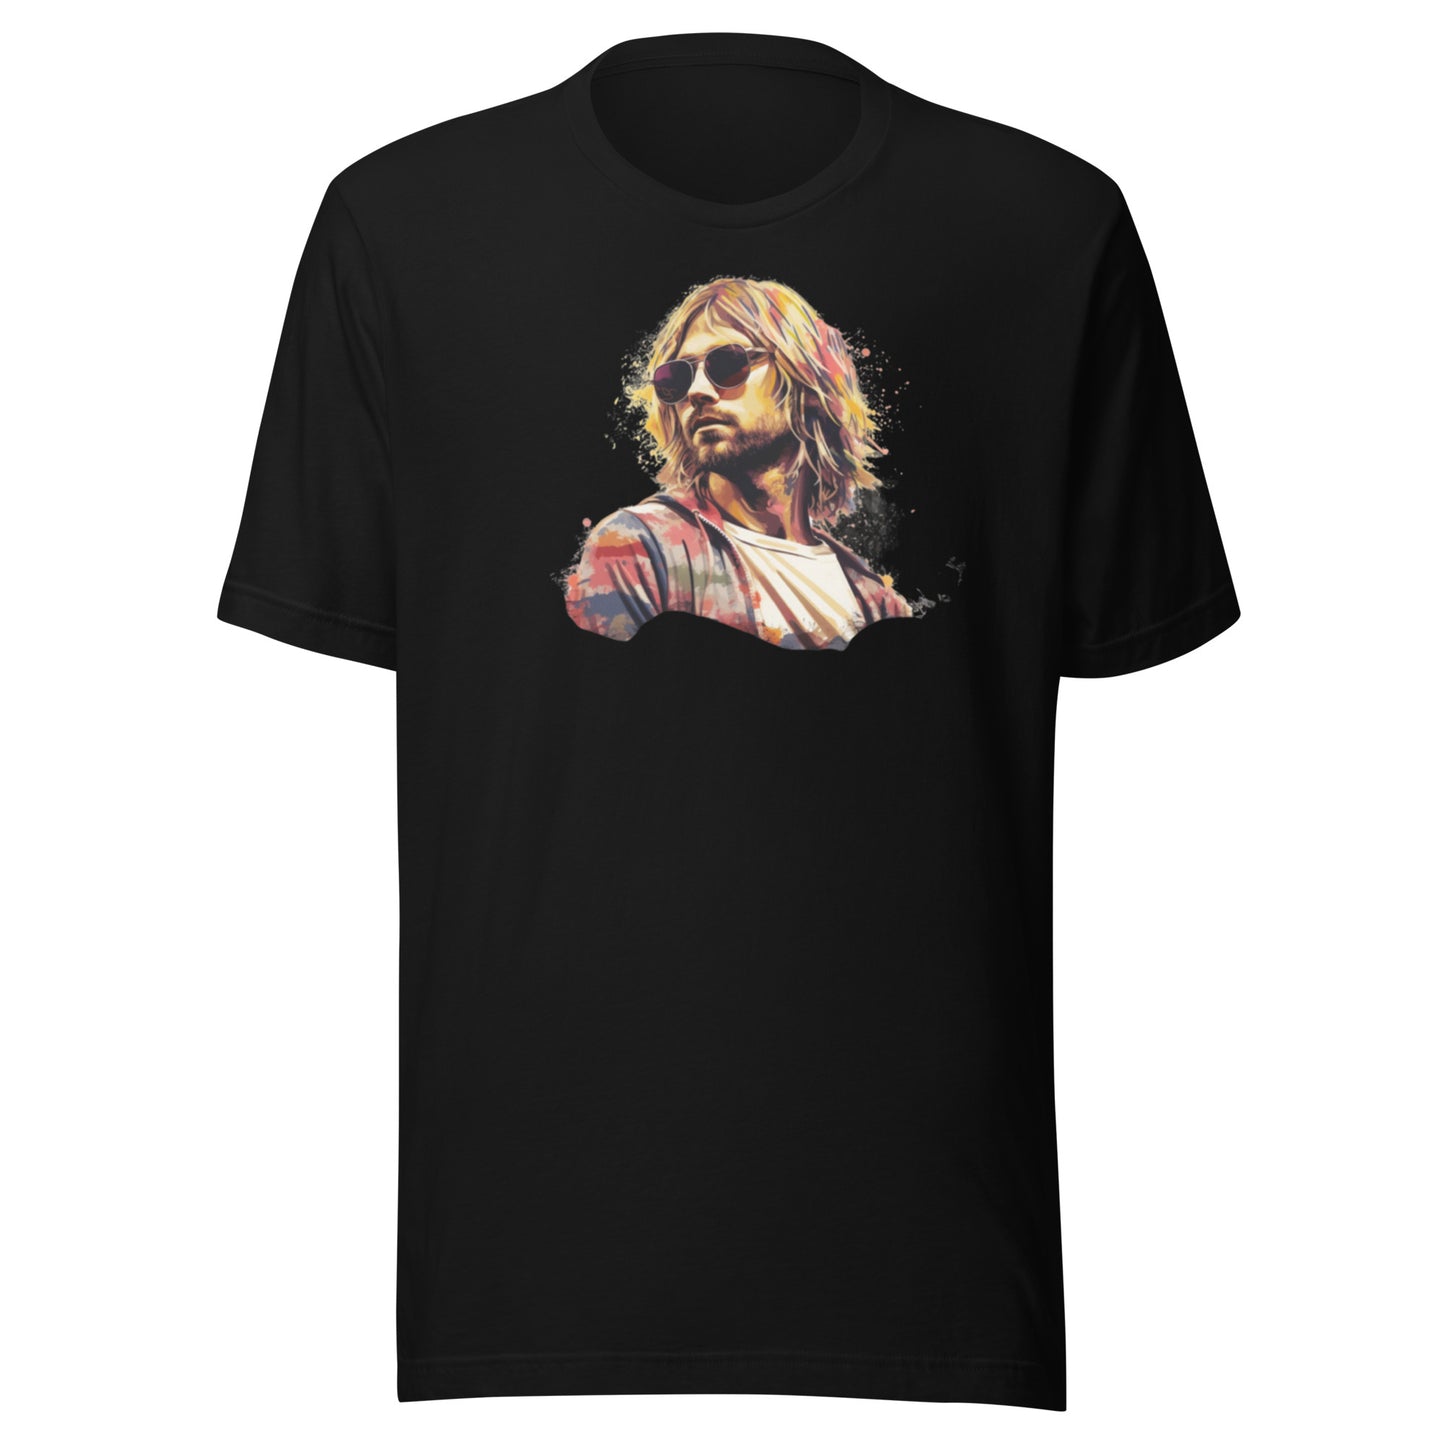 Nirvana shirt, Kurt Cobain Shirt, Music Tee, Trendy shirt, retro shirt, Retro Shirt